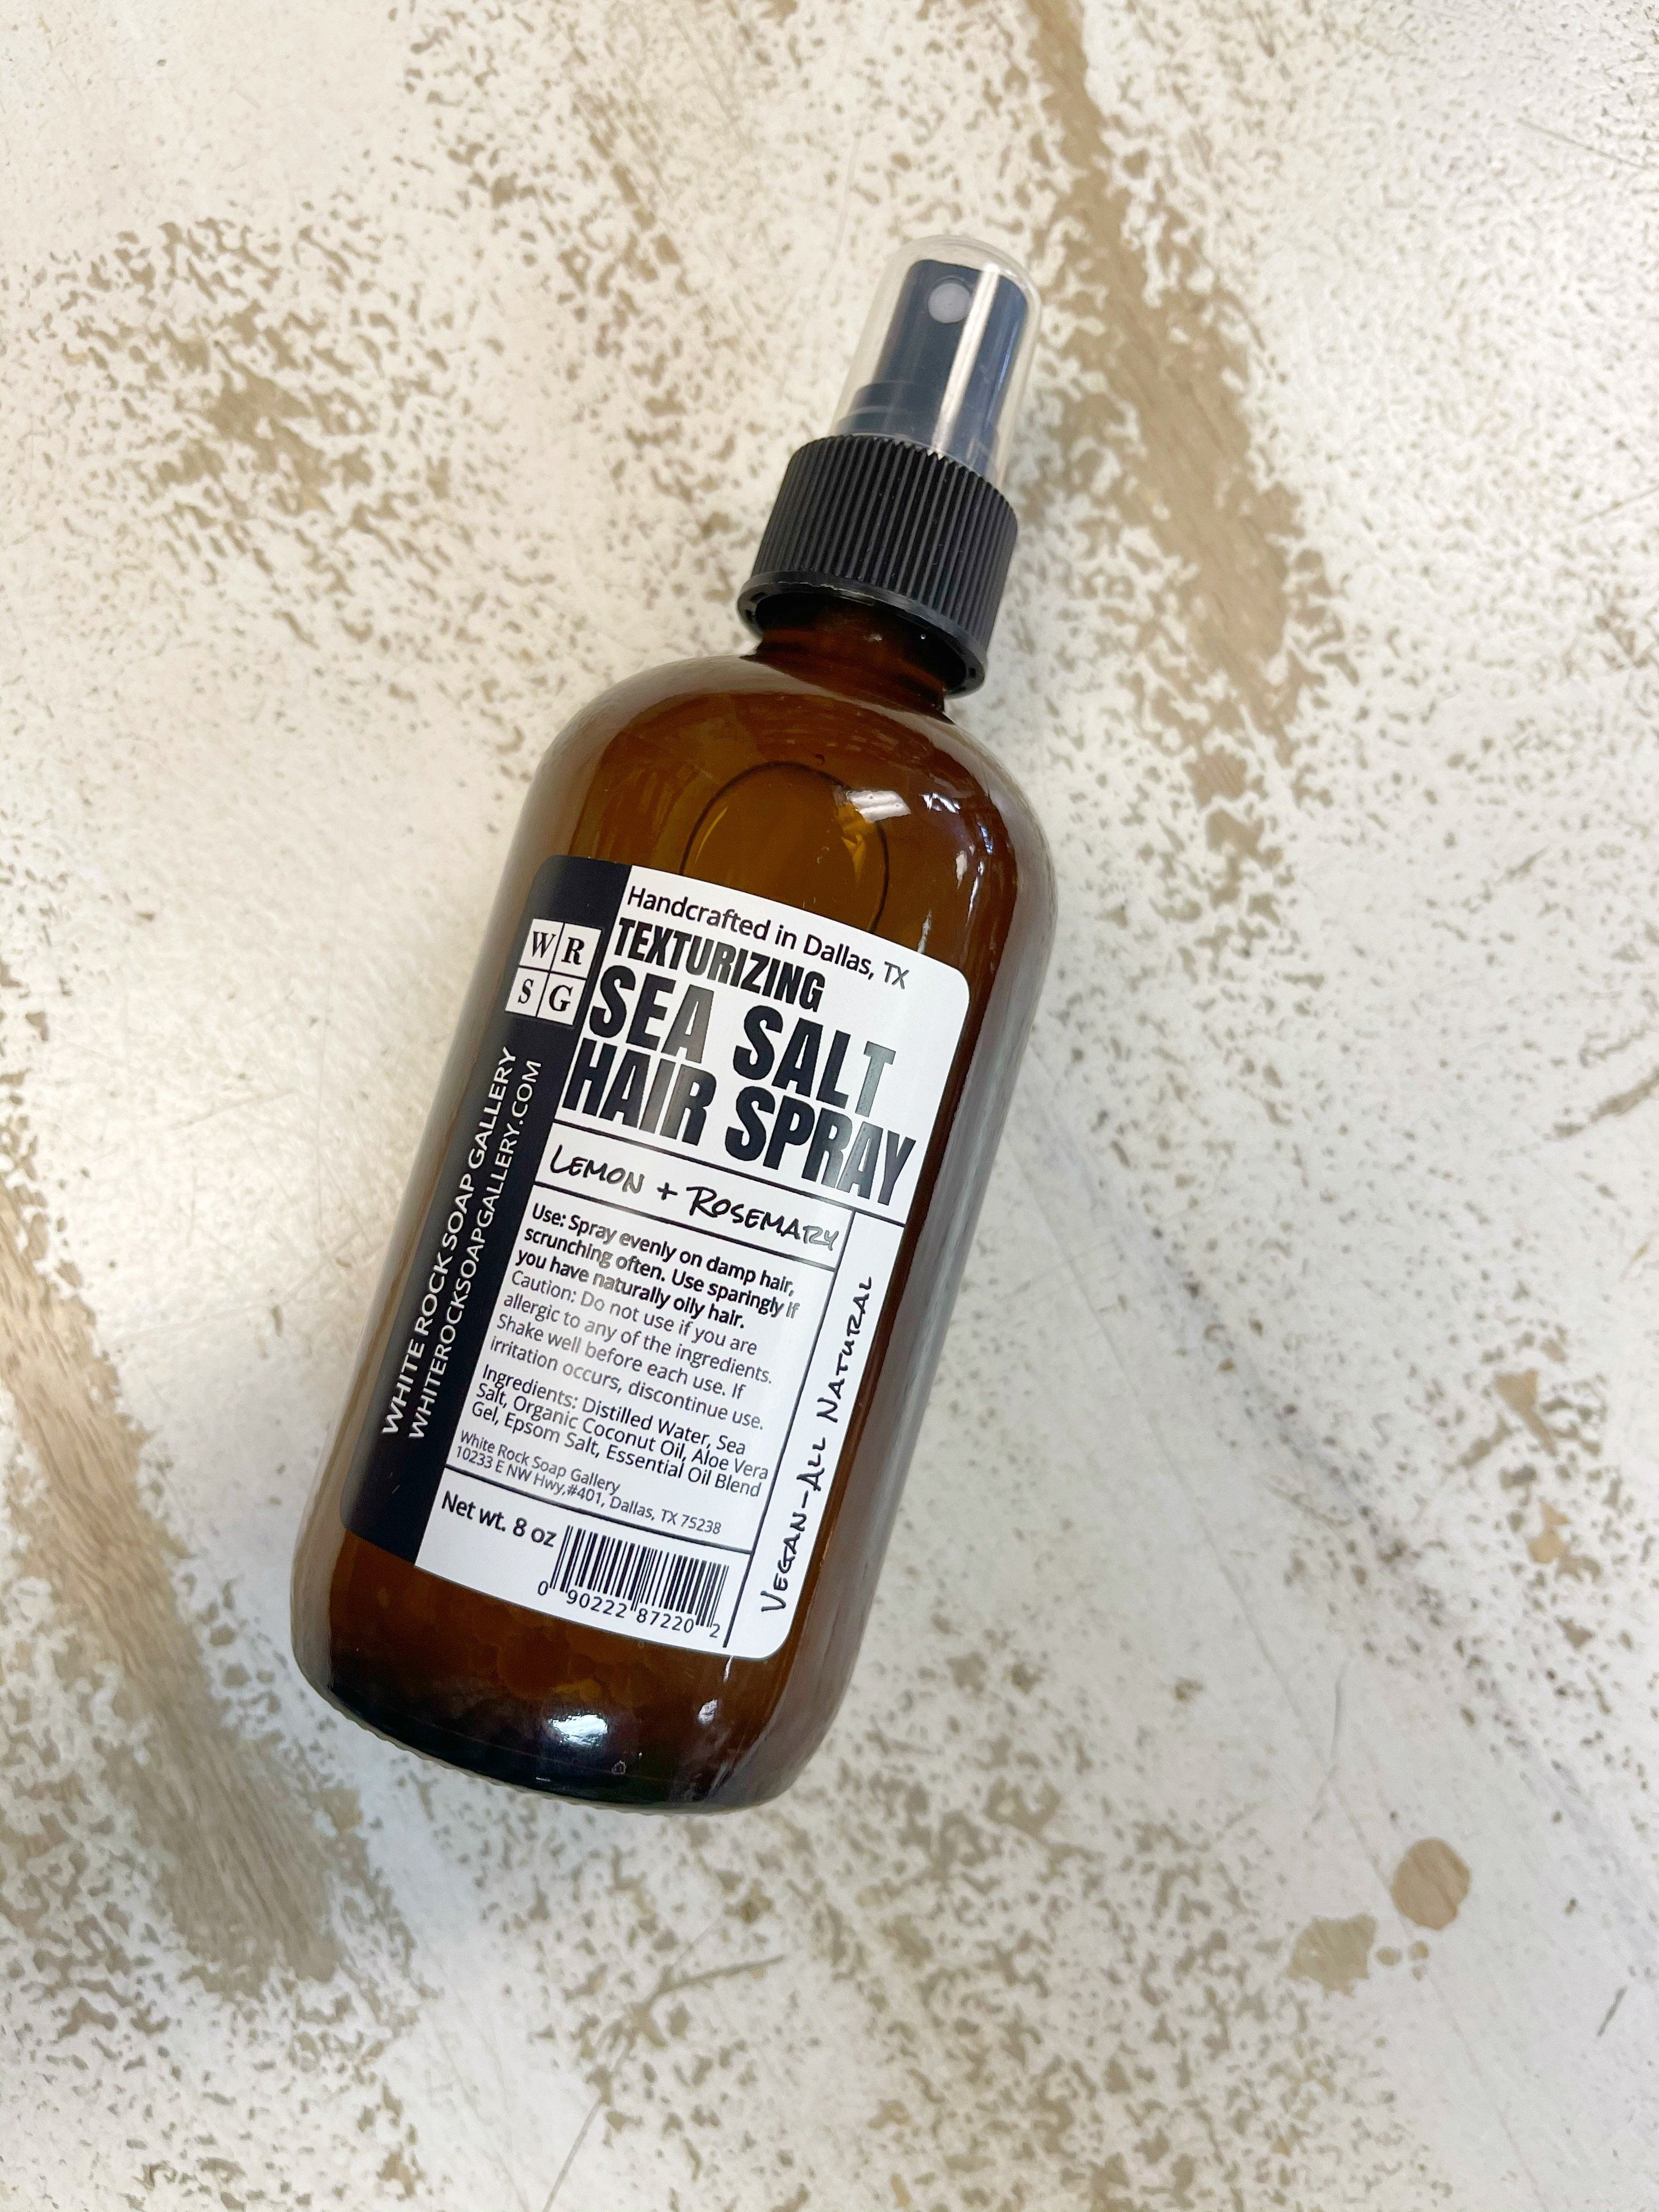 Texturizing Sea Salt Spray, Sea Salt Hair Products